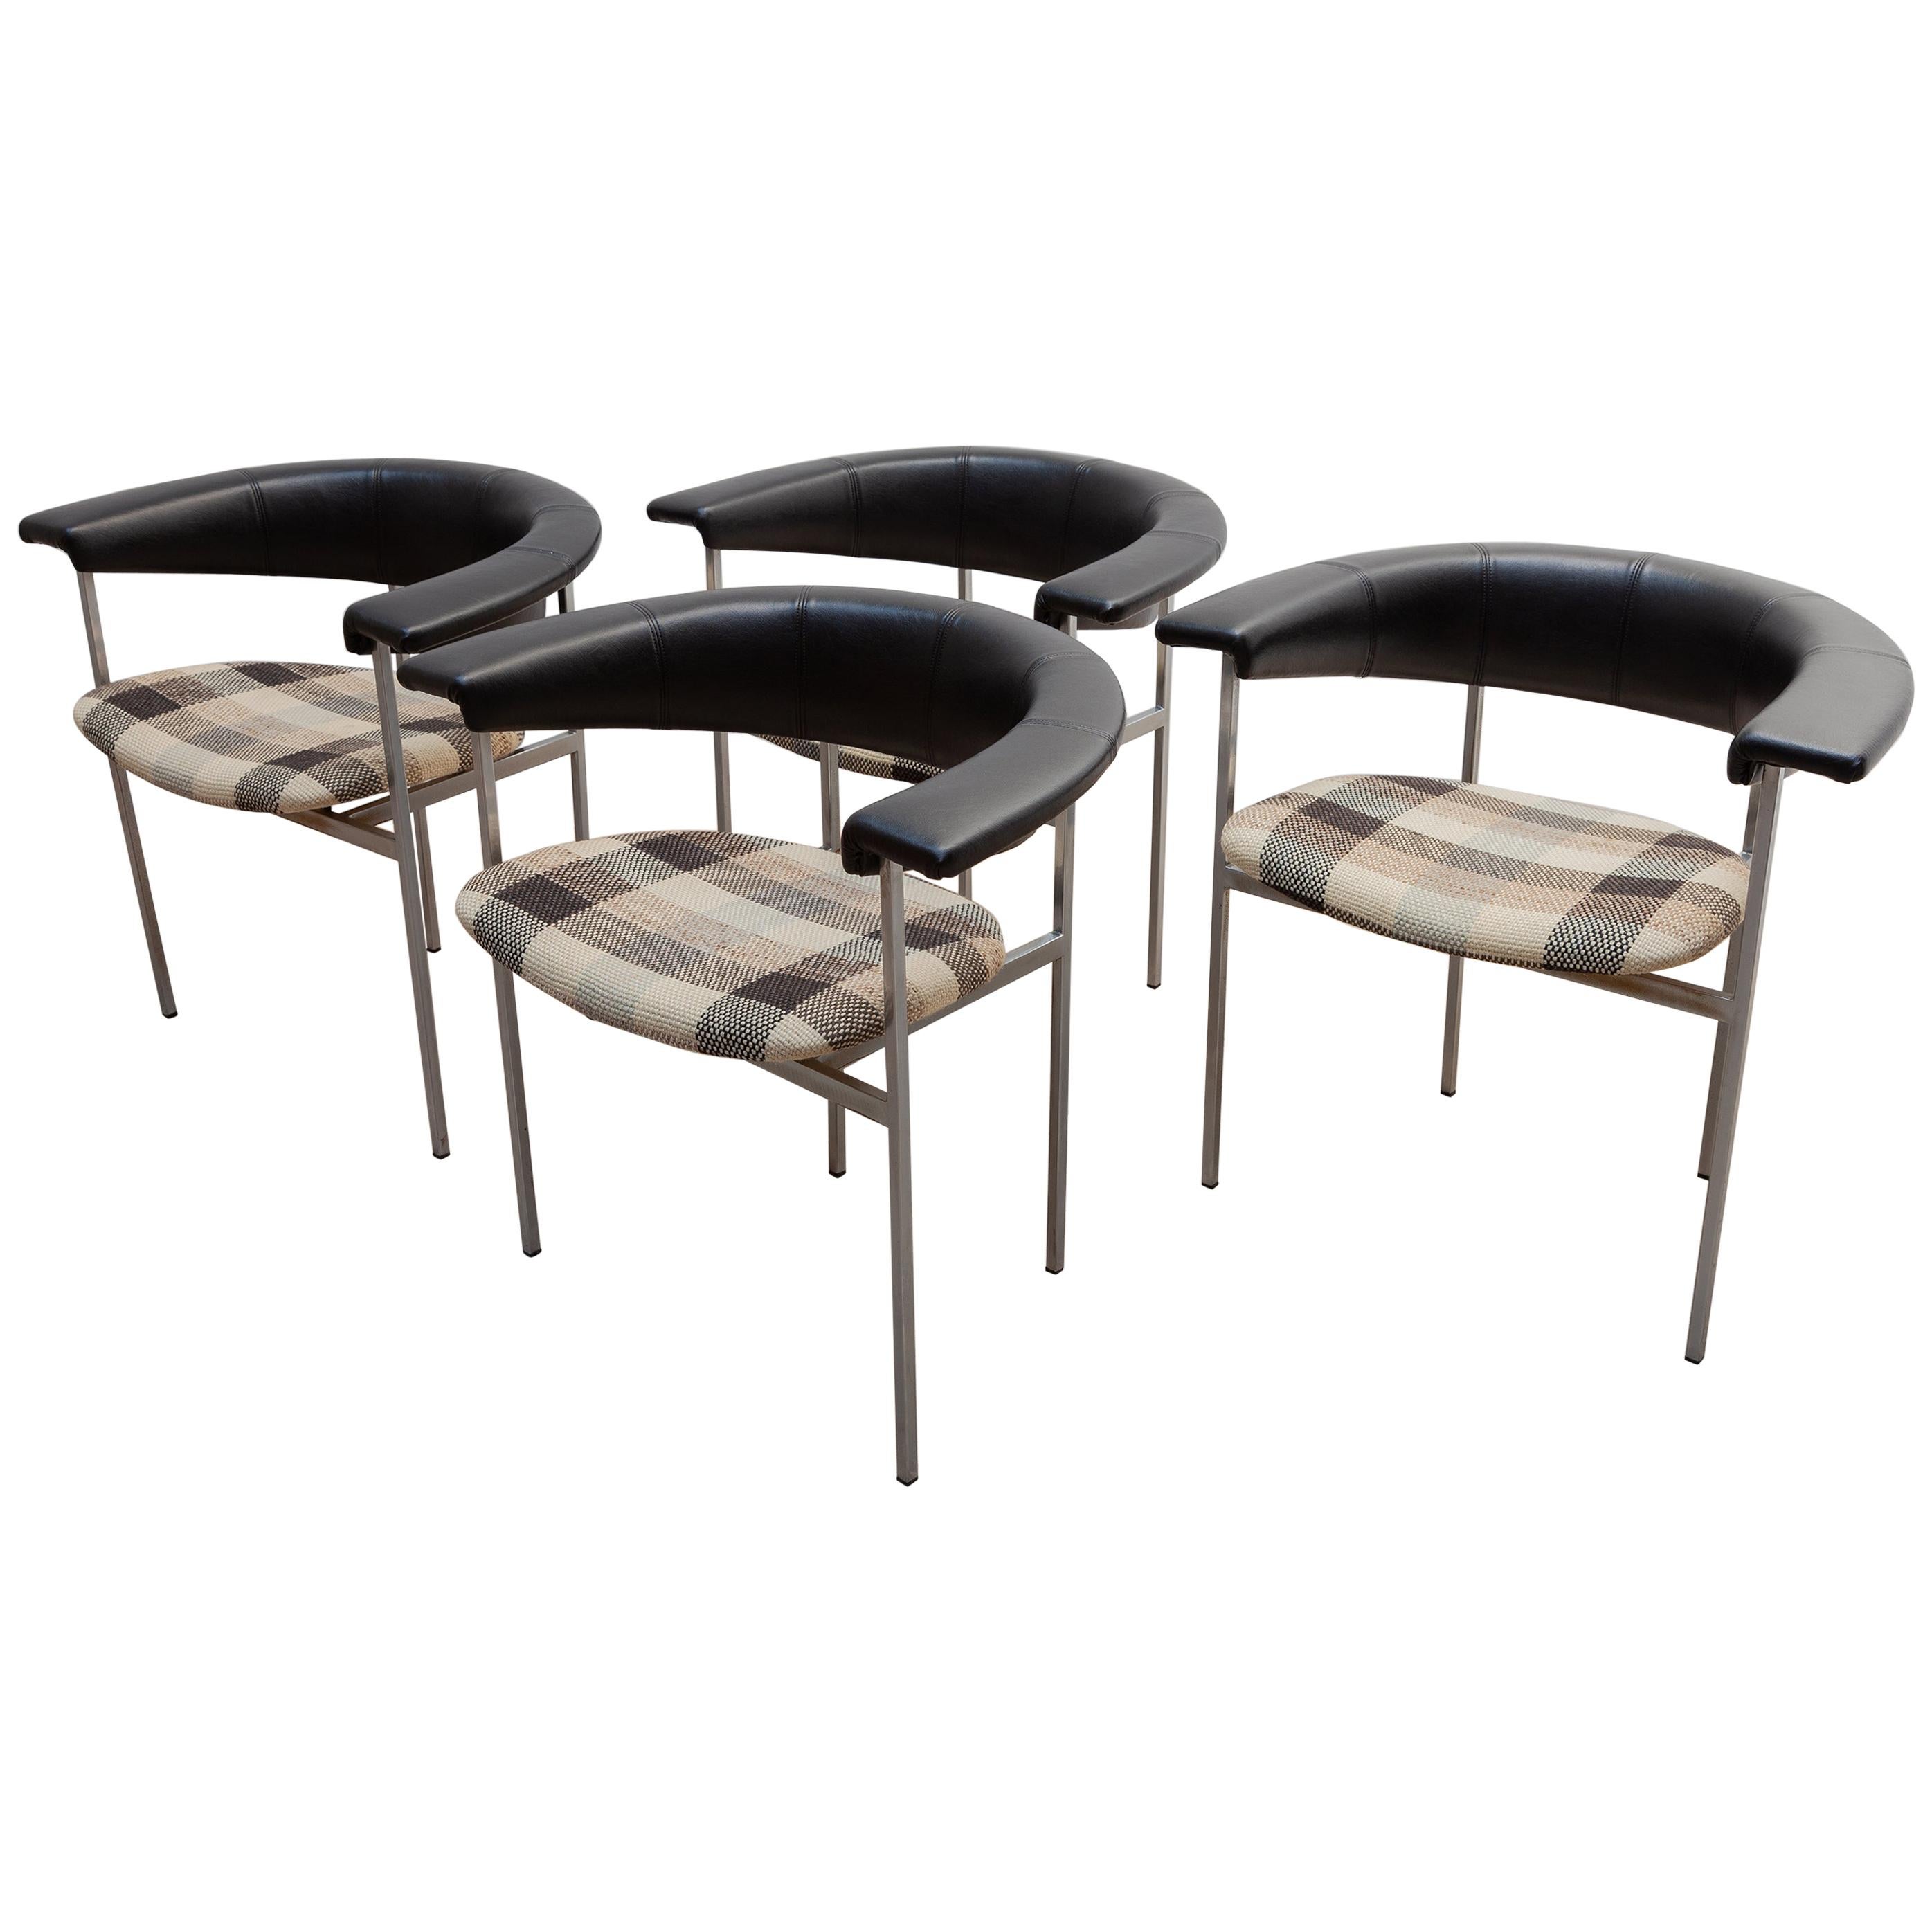 Set of Four Dutch Design "Meander" Chairs Designed by Rudolf Wolf, 1963